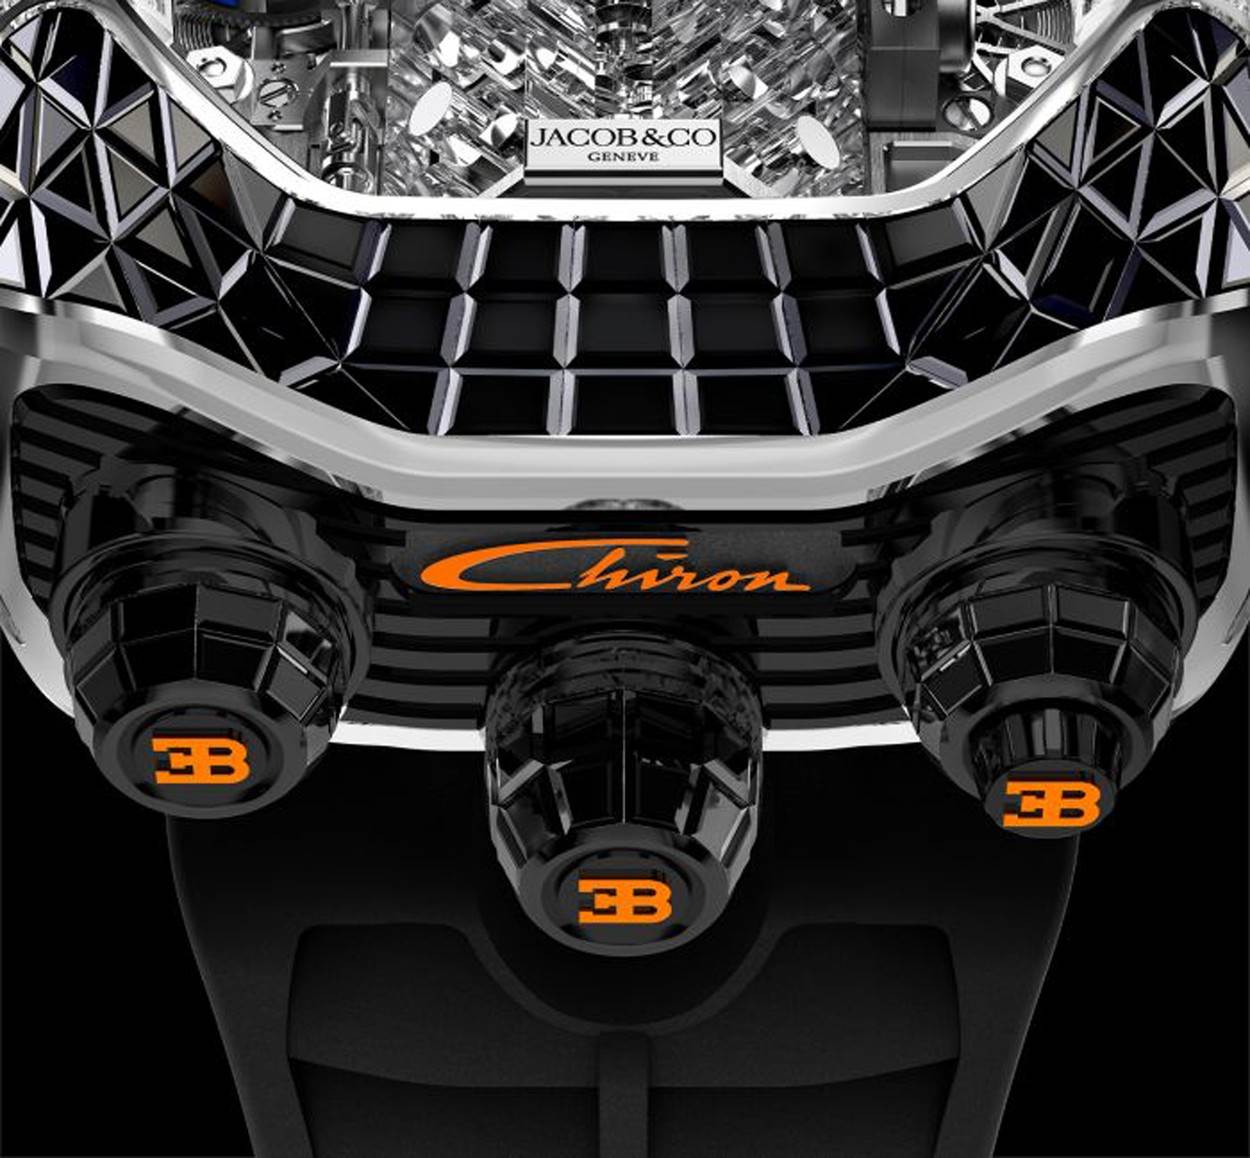  Bugatti Chiron Tourbillon;Jacob & Co;Bugatti Chiron;watch;one-off;inique;engine;pistons;turbichargers;daimonds;sapphires 